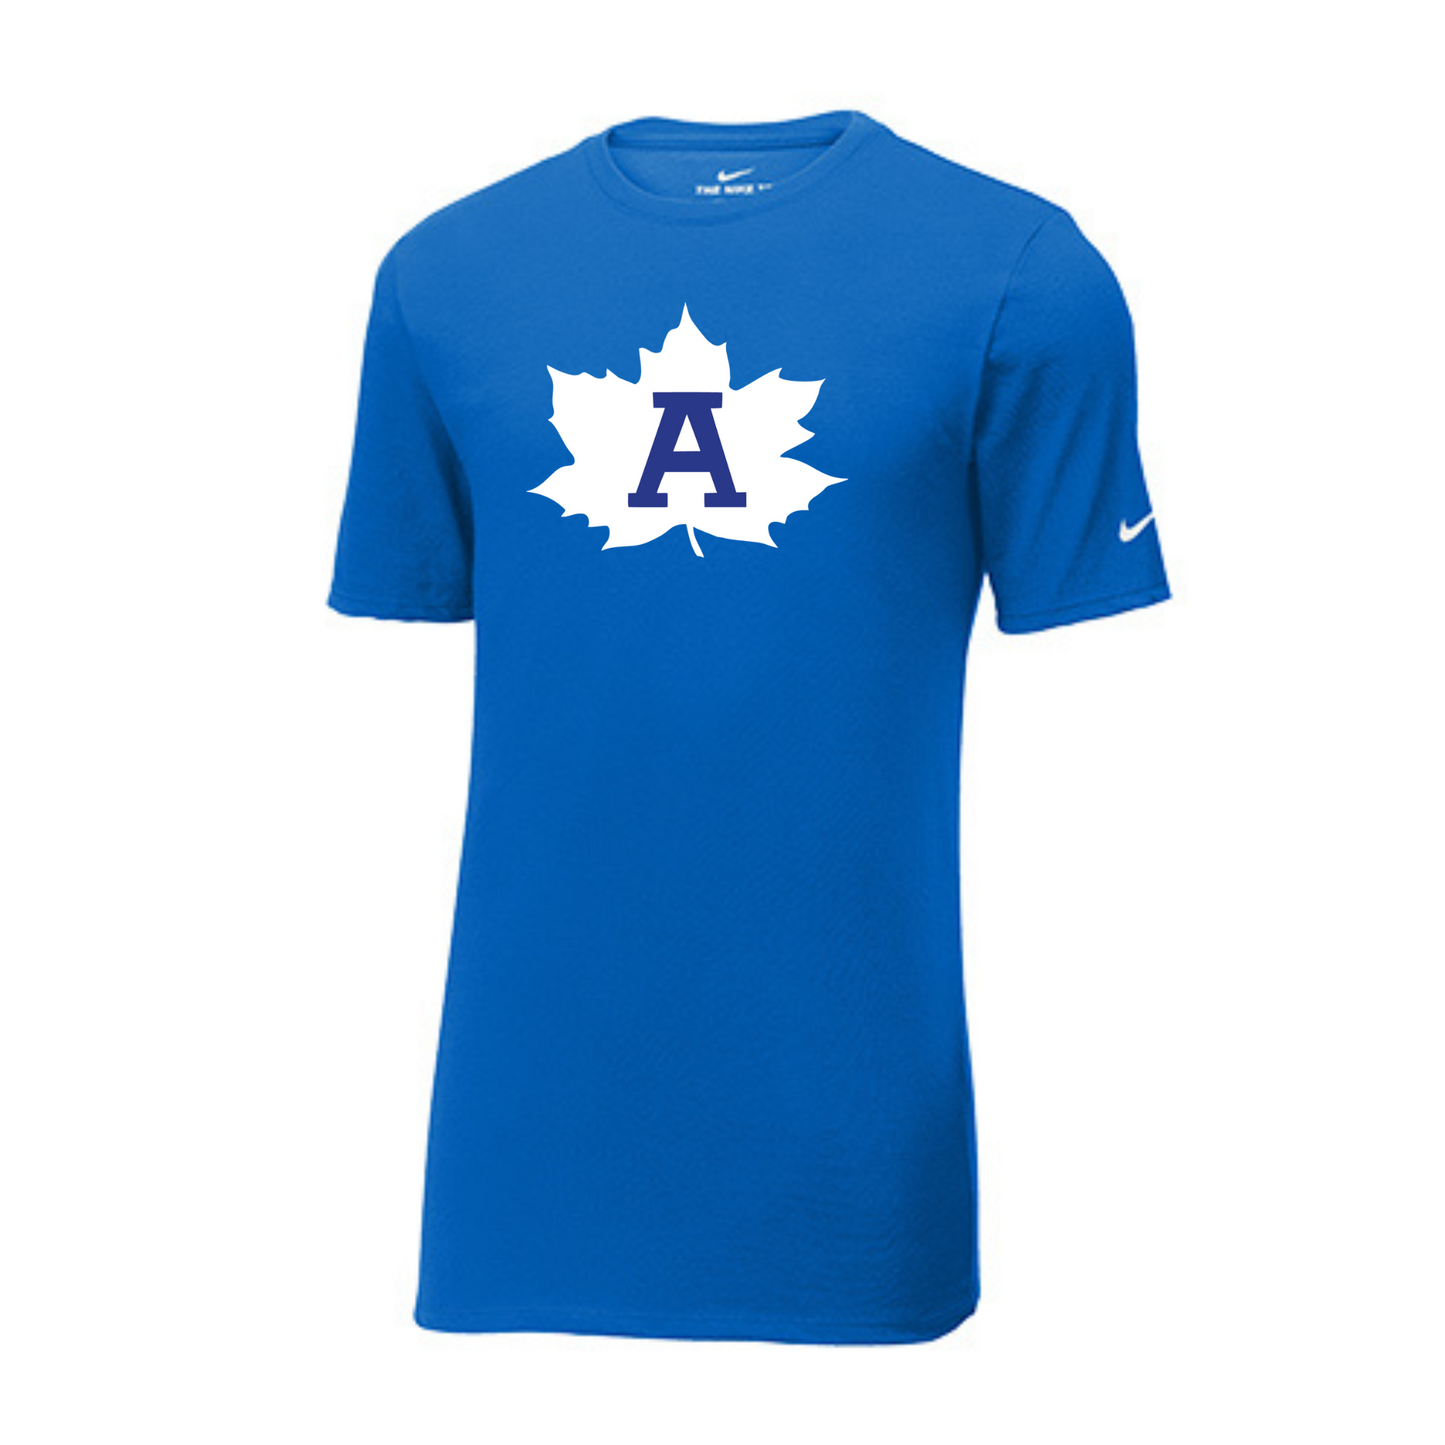 Adrian Maples Nike Dri Fit Shirt